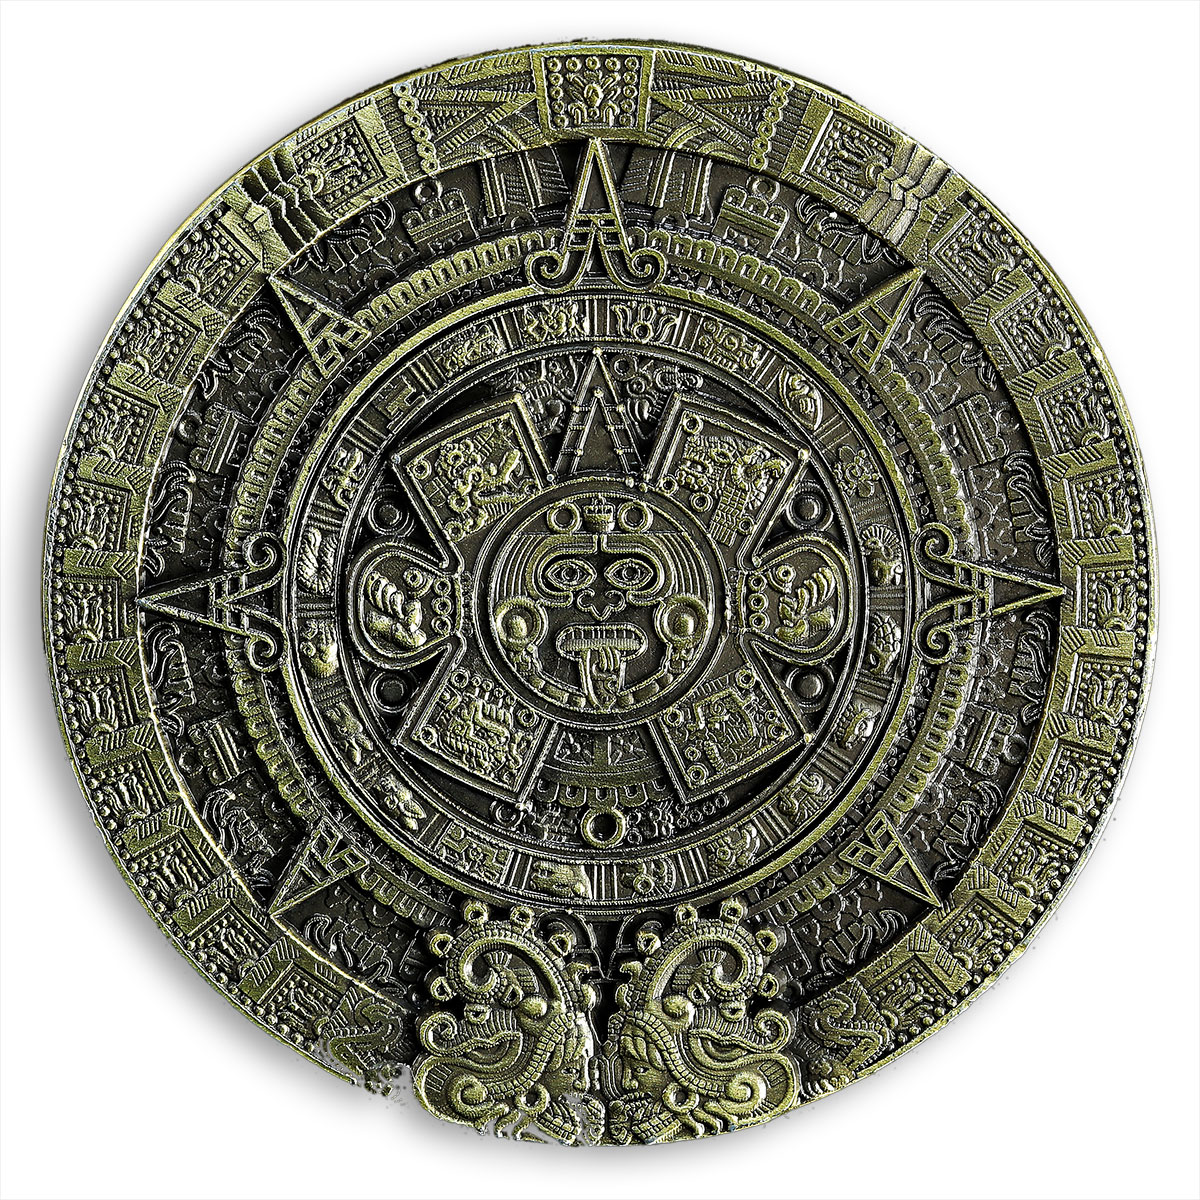 The Mayan Long Count Calendar Aztec 80 mm big bronze plated medal souvenir token